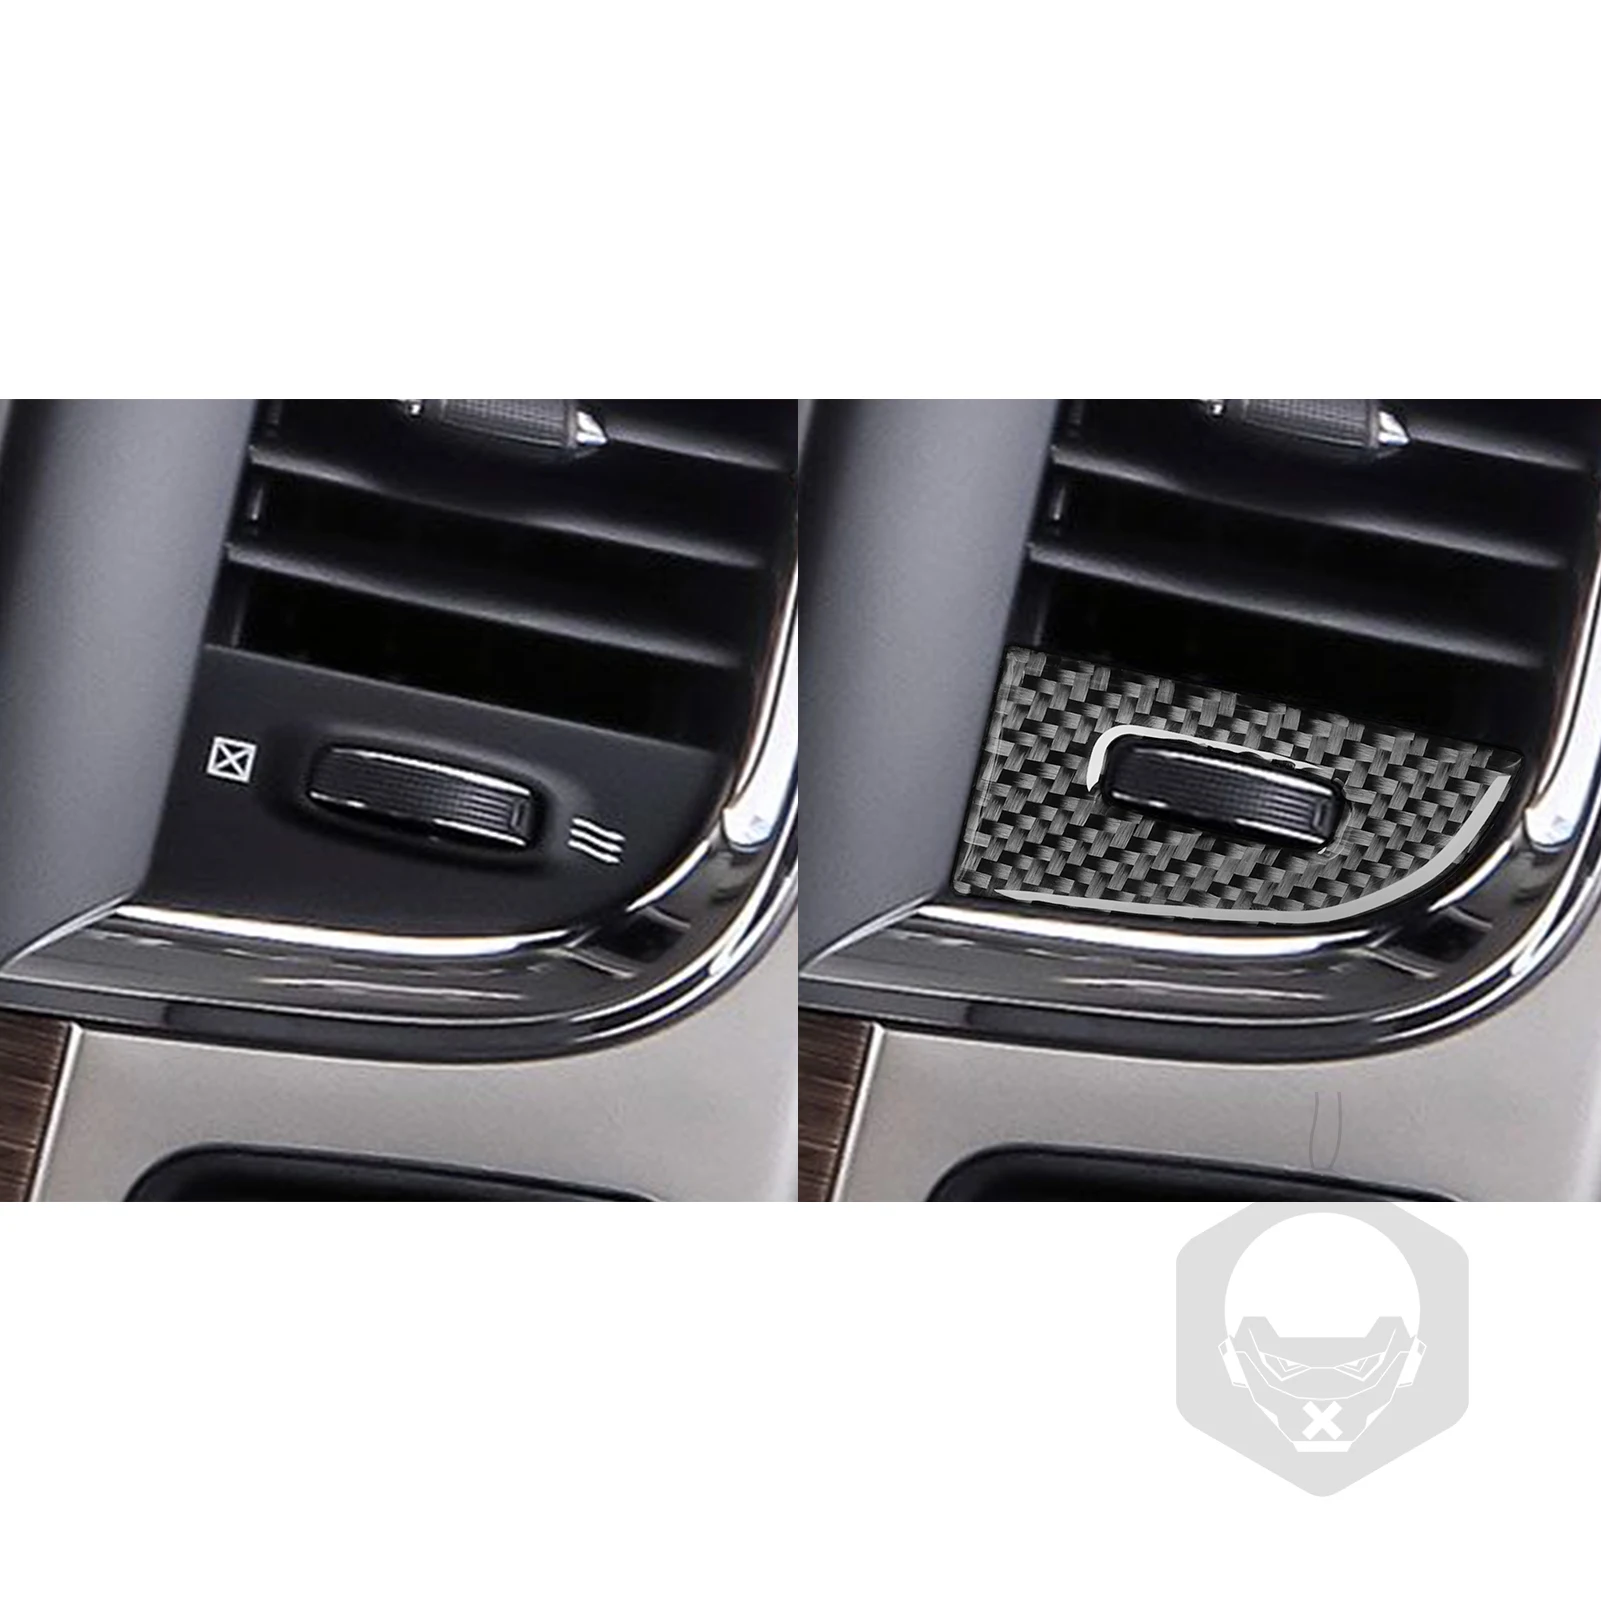 For Dodge Ram 2013 2014 2015 Central Air Outlet Temperature Display Control Panel Cover Trim Carbon Fiber Accessori Interior